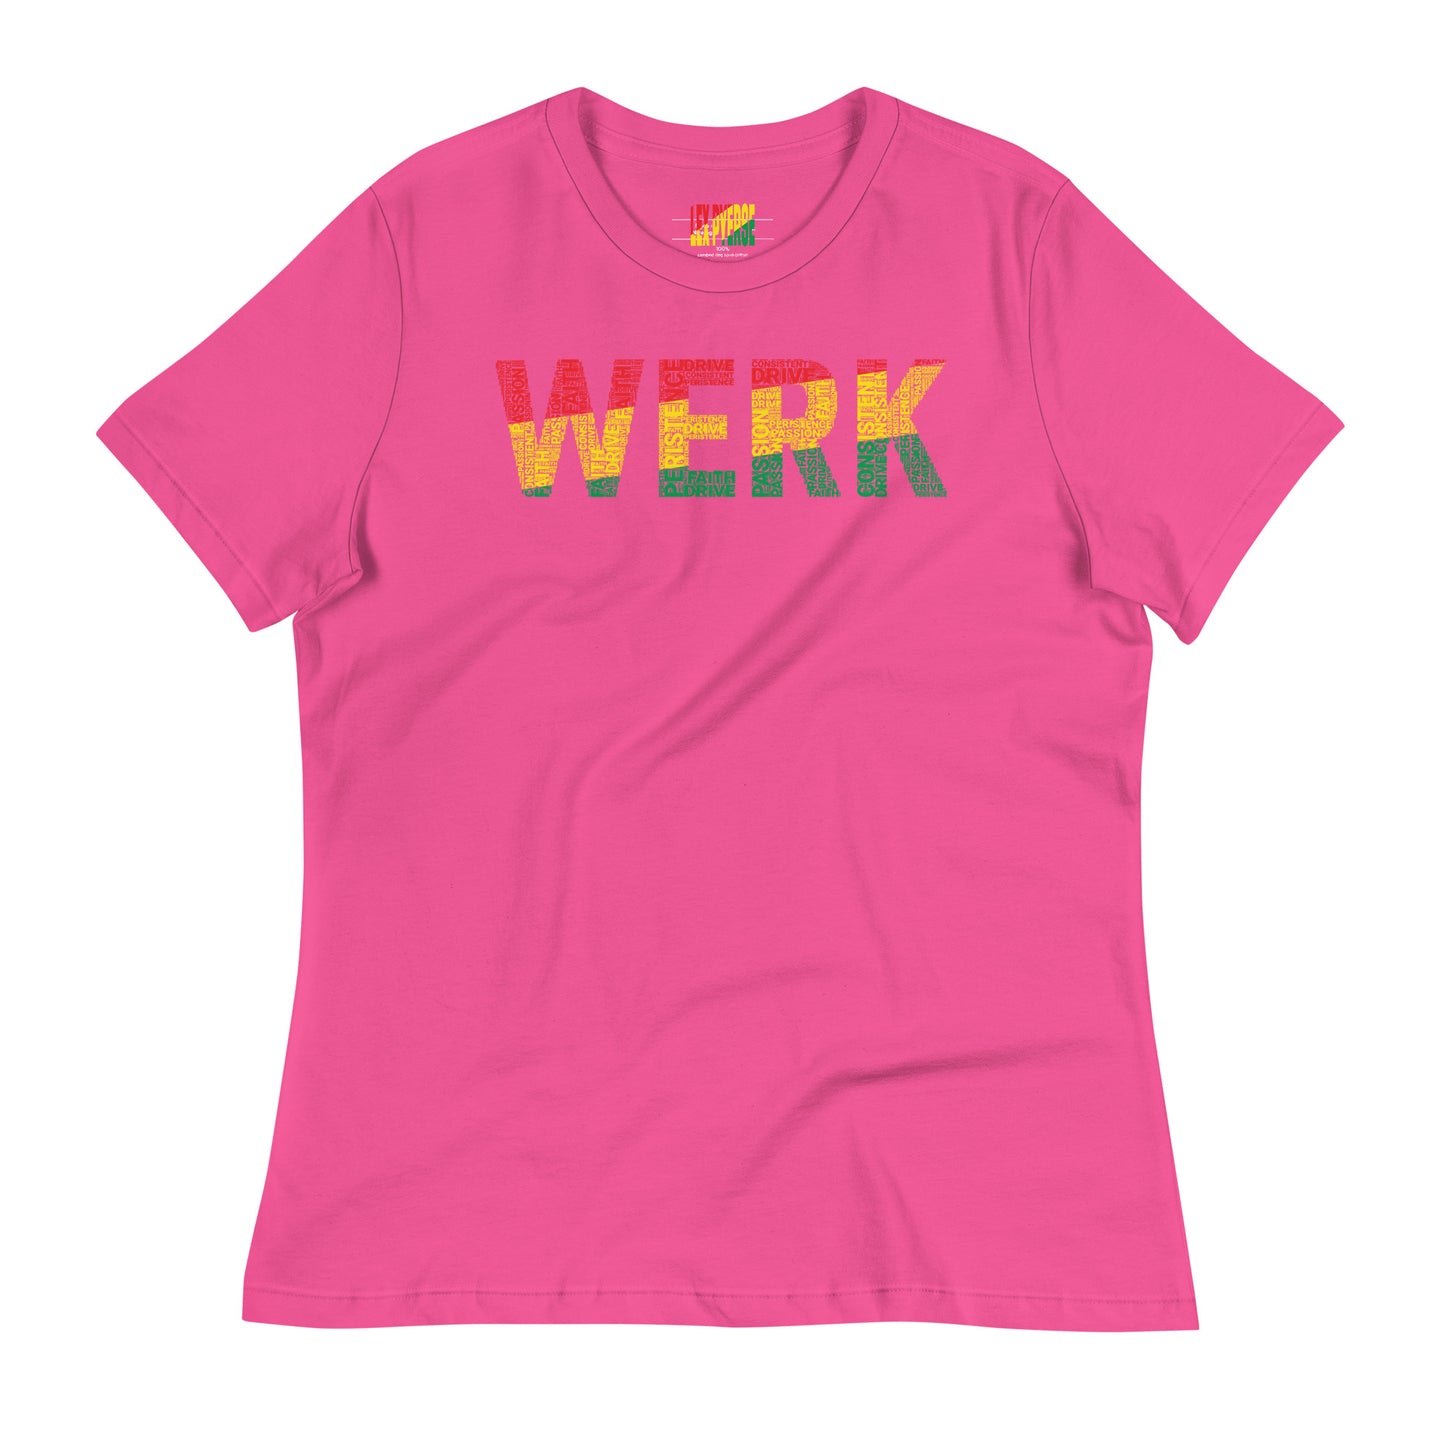 WERK Word Cluster Women's short sleeve t-shirt